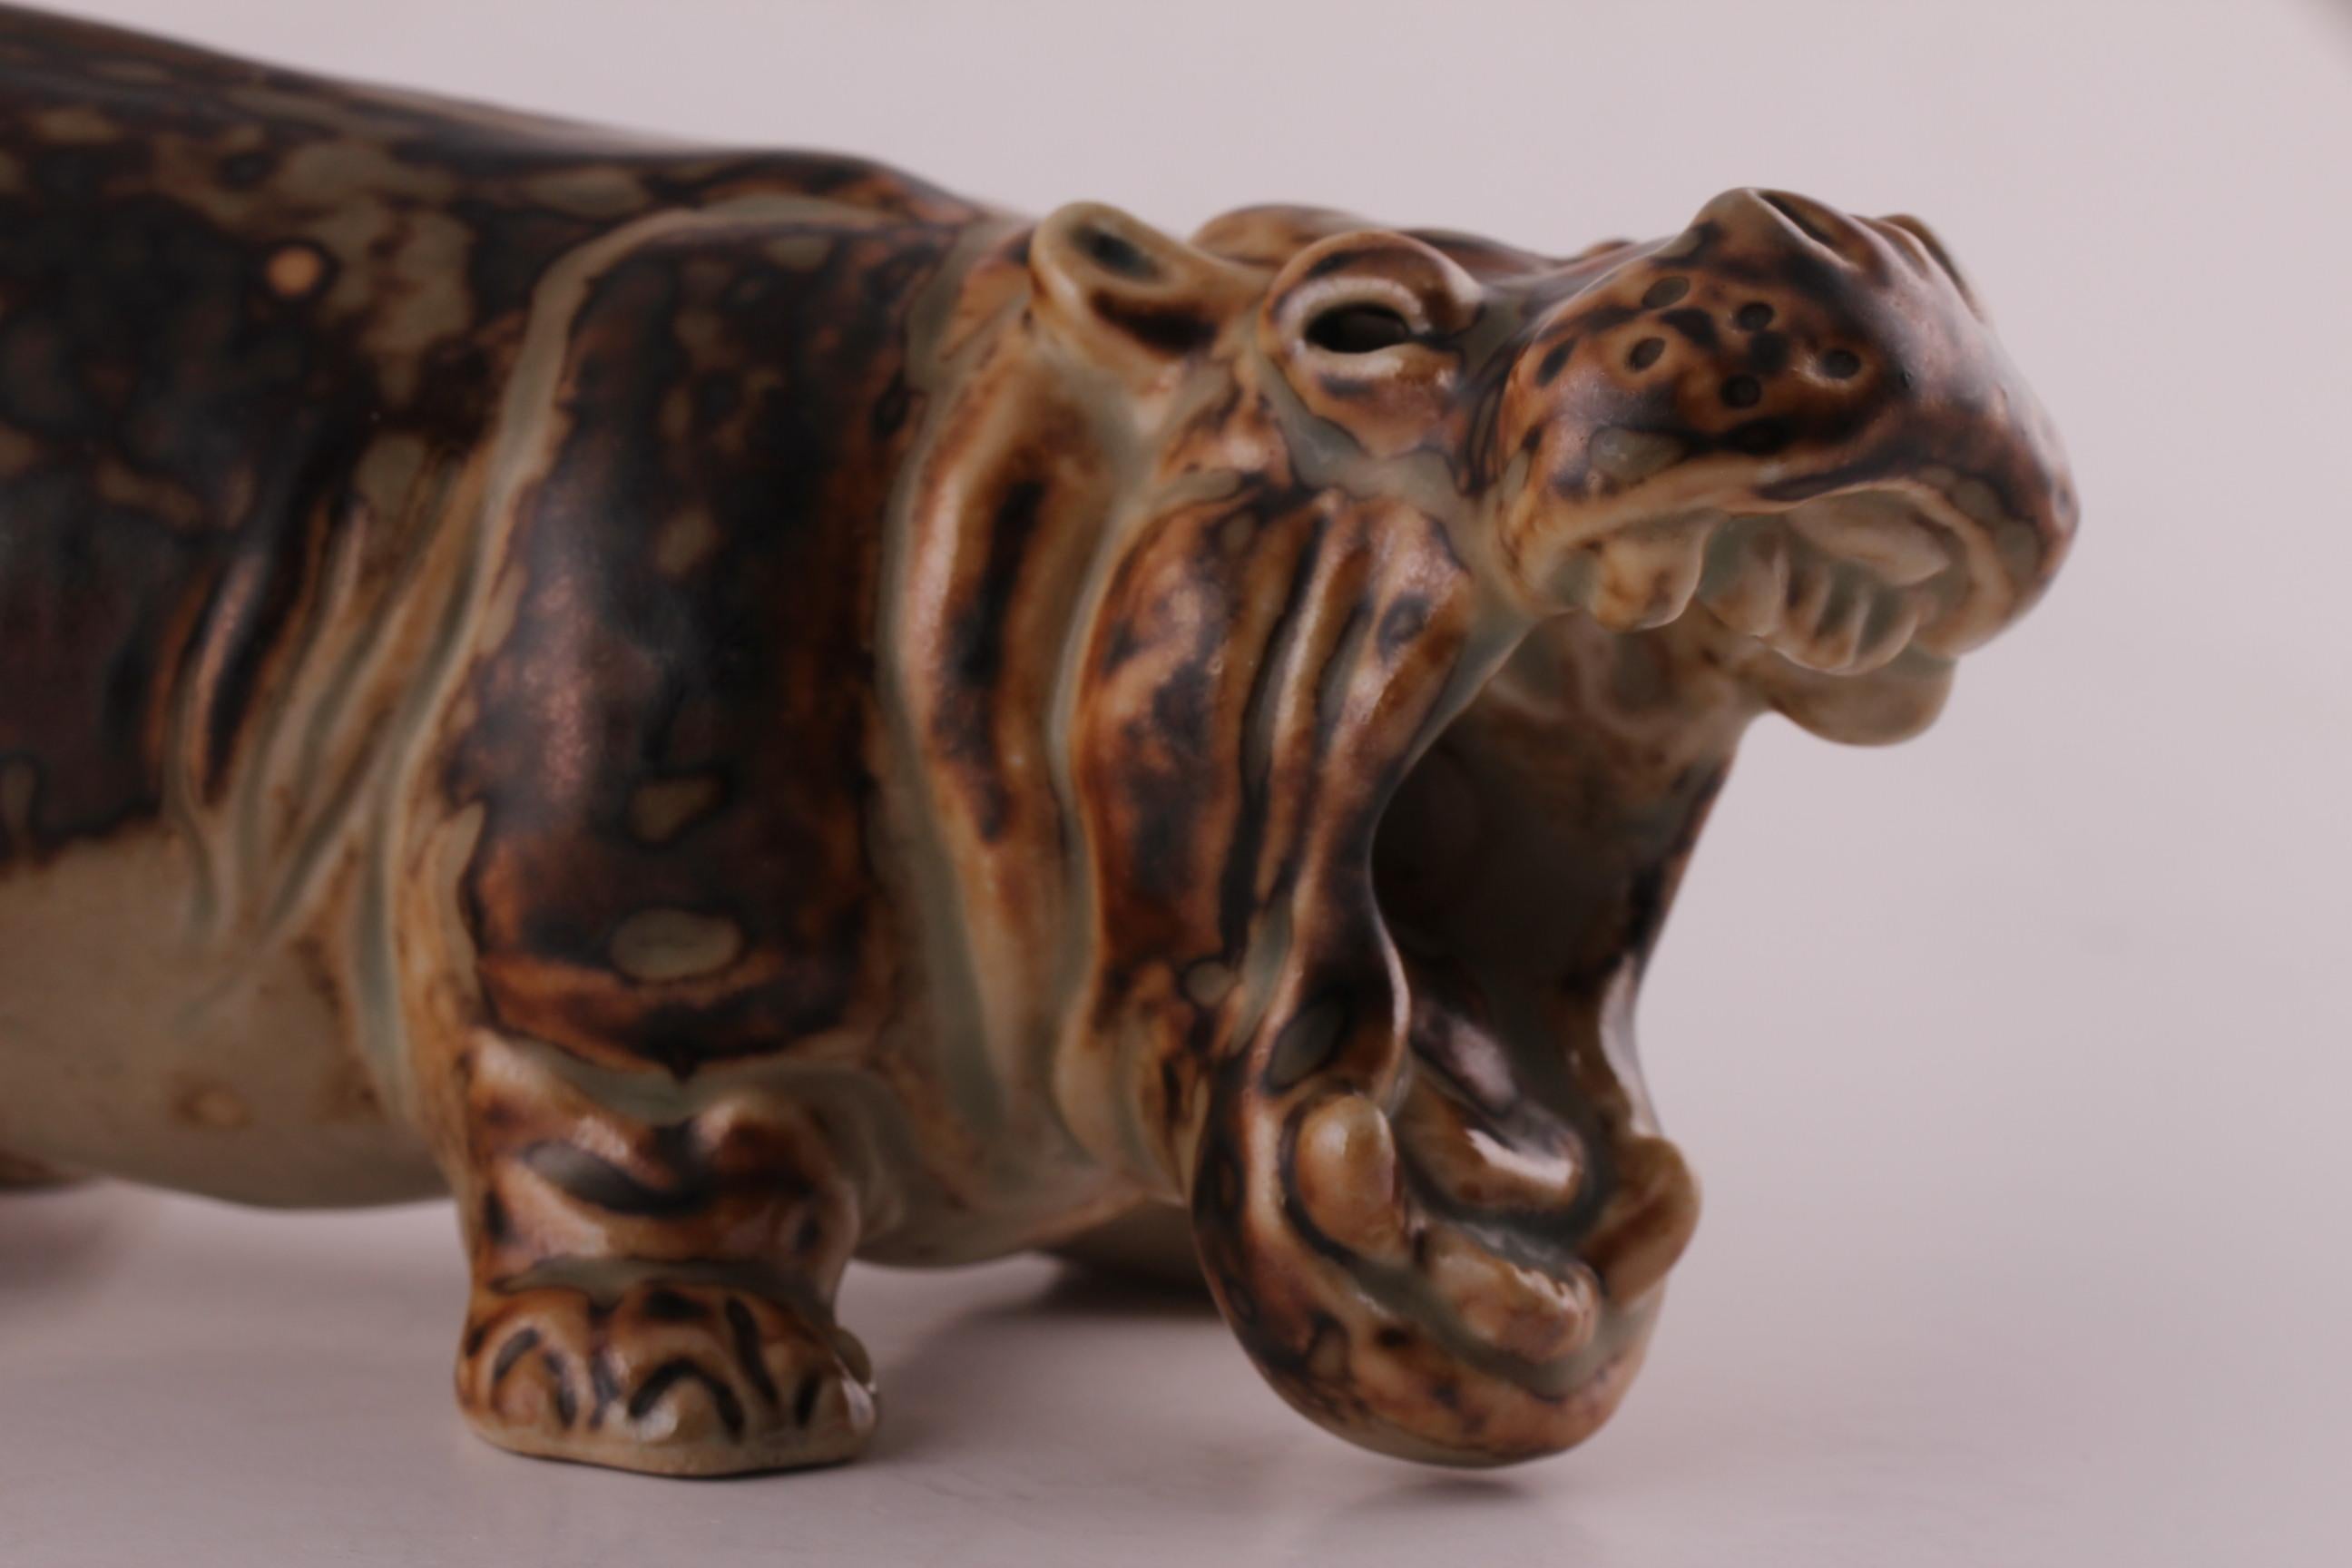 Mid-Century Modern Royal Copenhagen Figurine of Hippopotamus Designed by Knud Kyhn, Made in Denmark